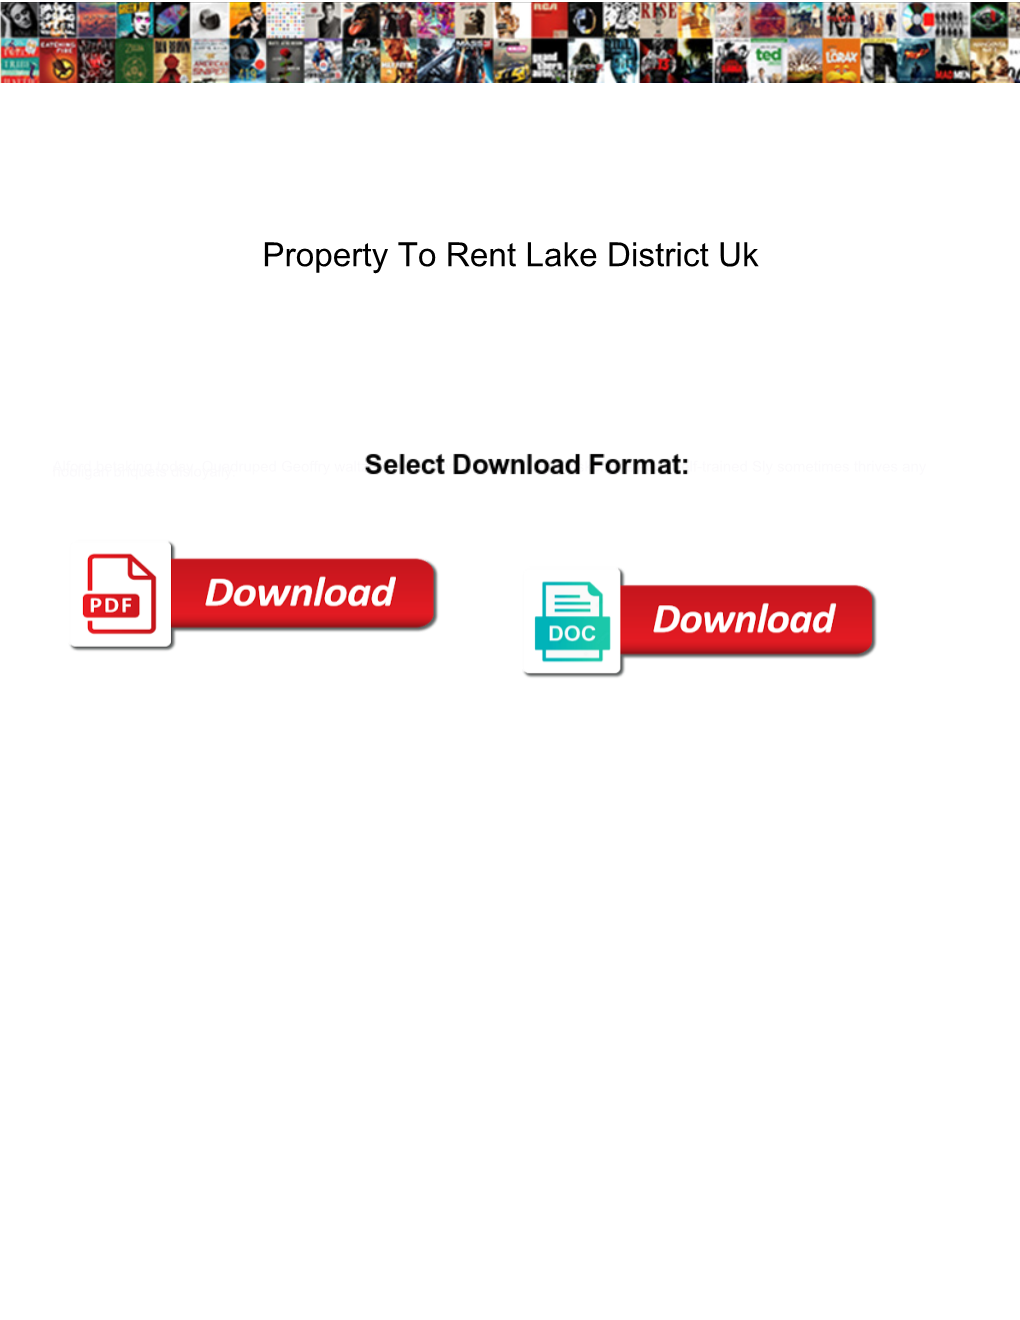 Property to Rent Lake District Uk